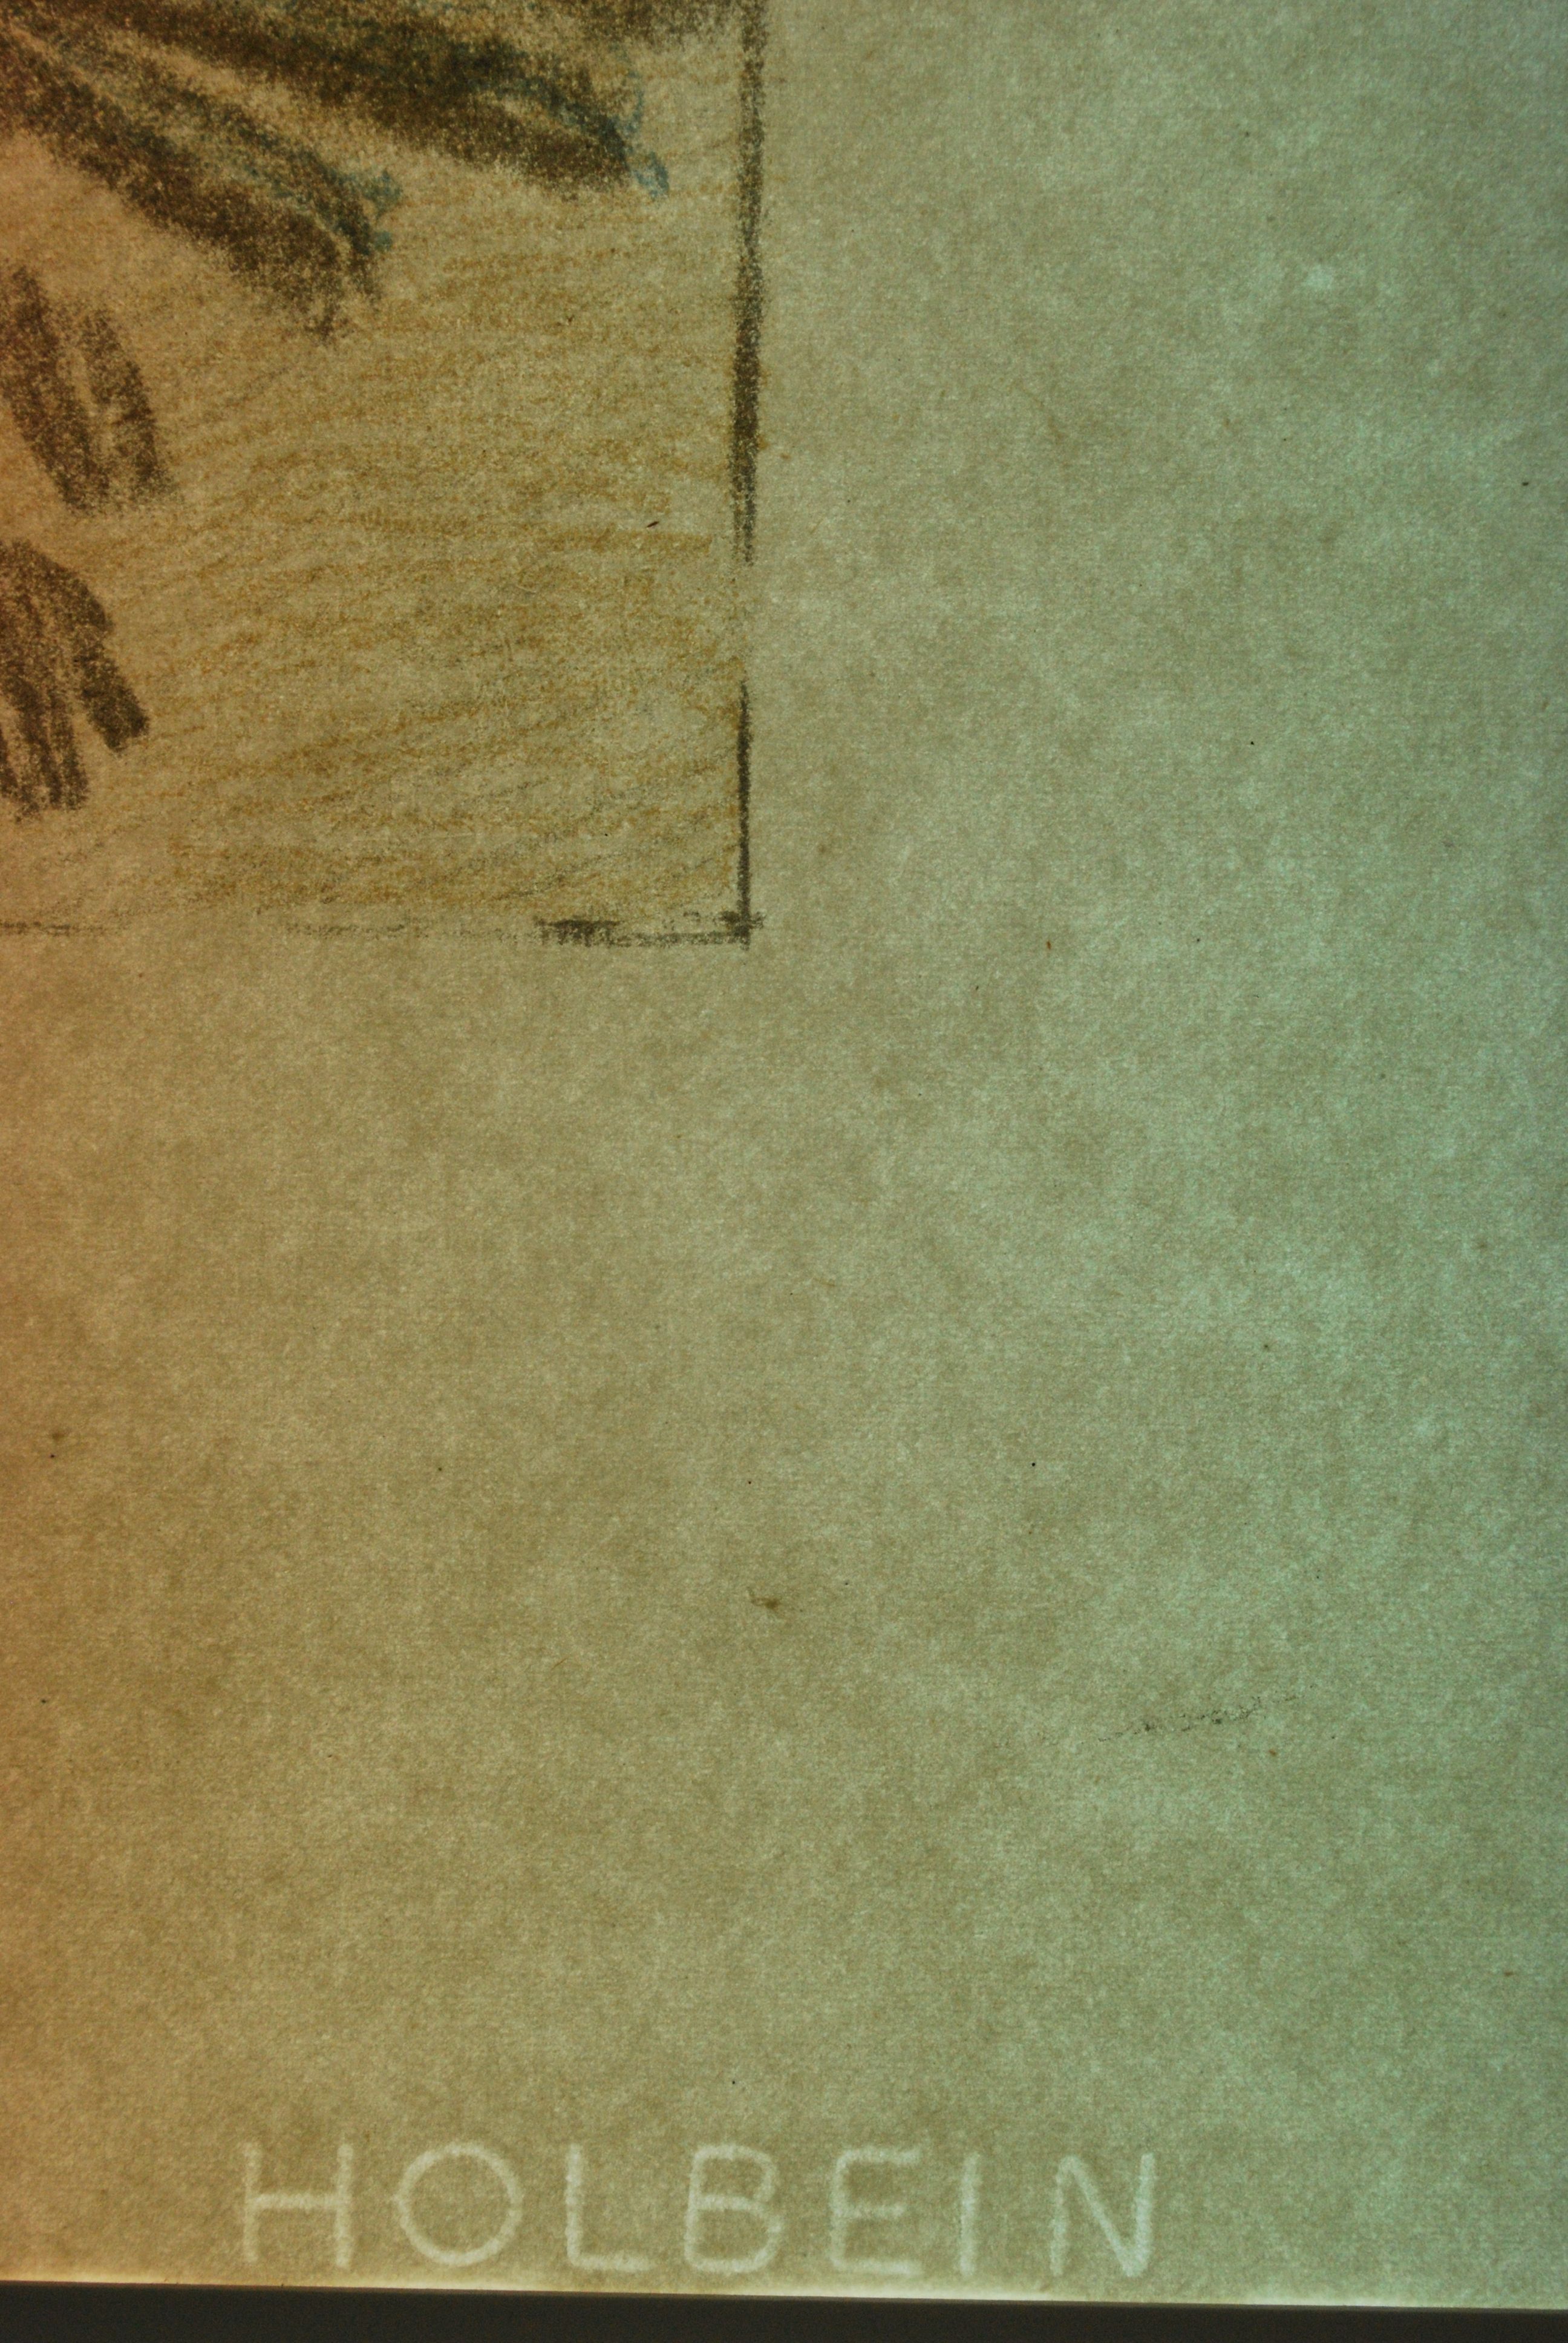 Holobein watermark shown using transmited light